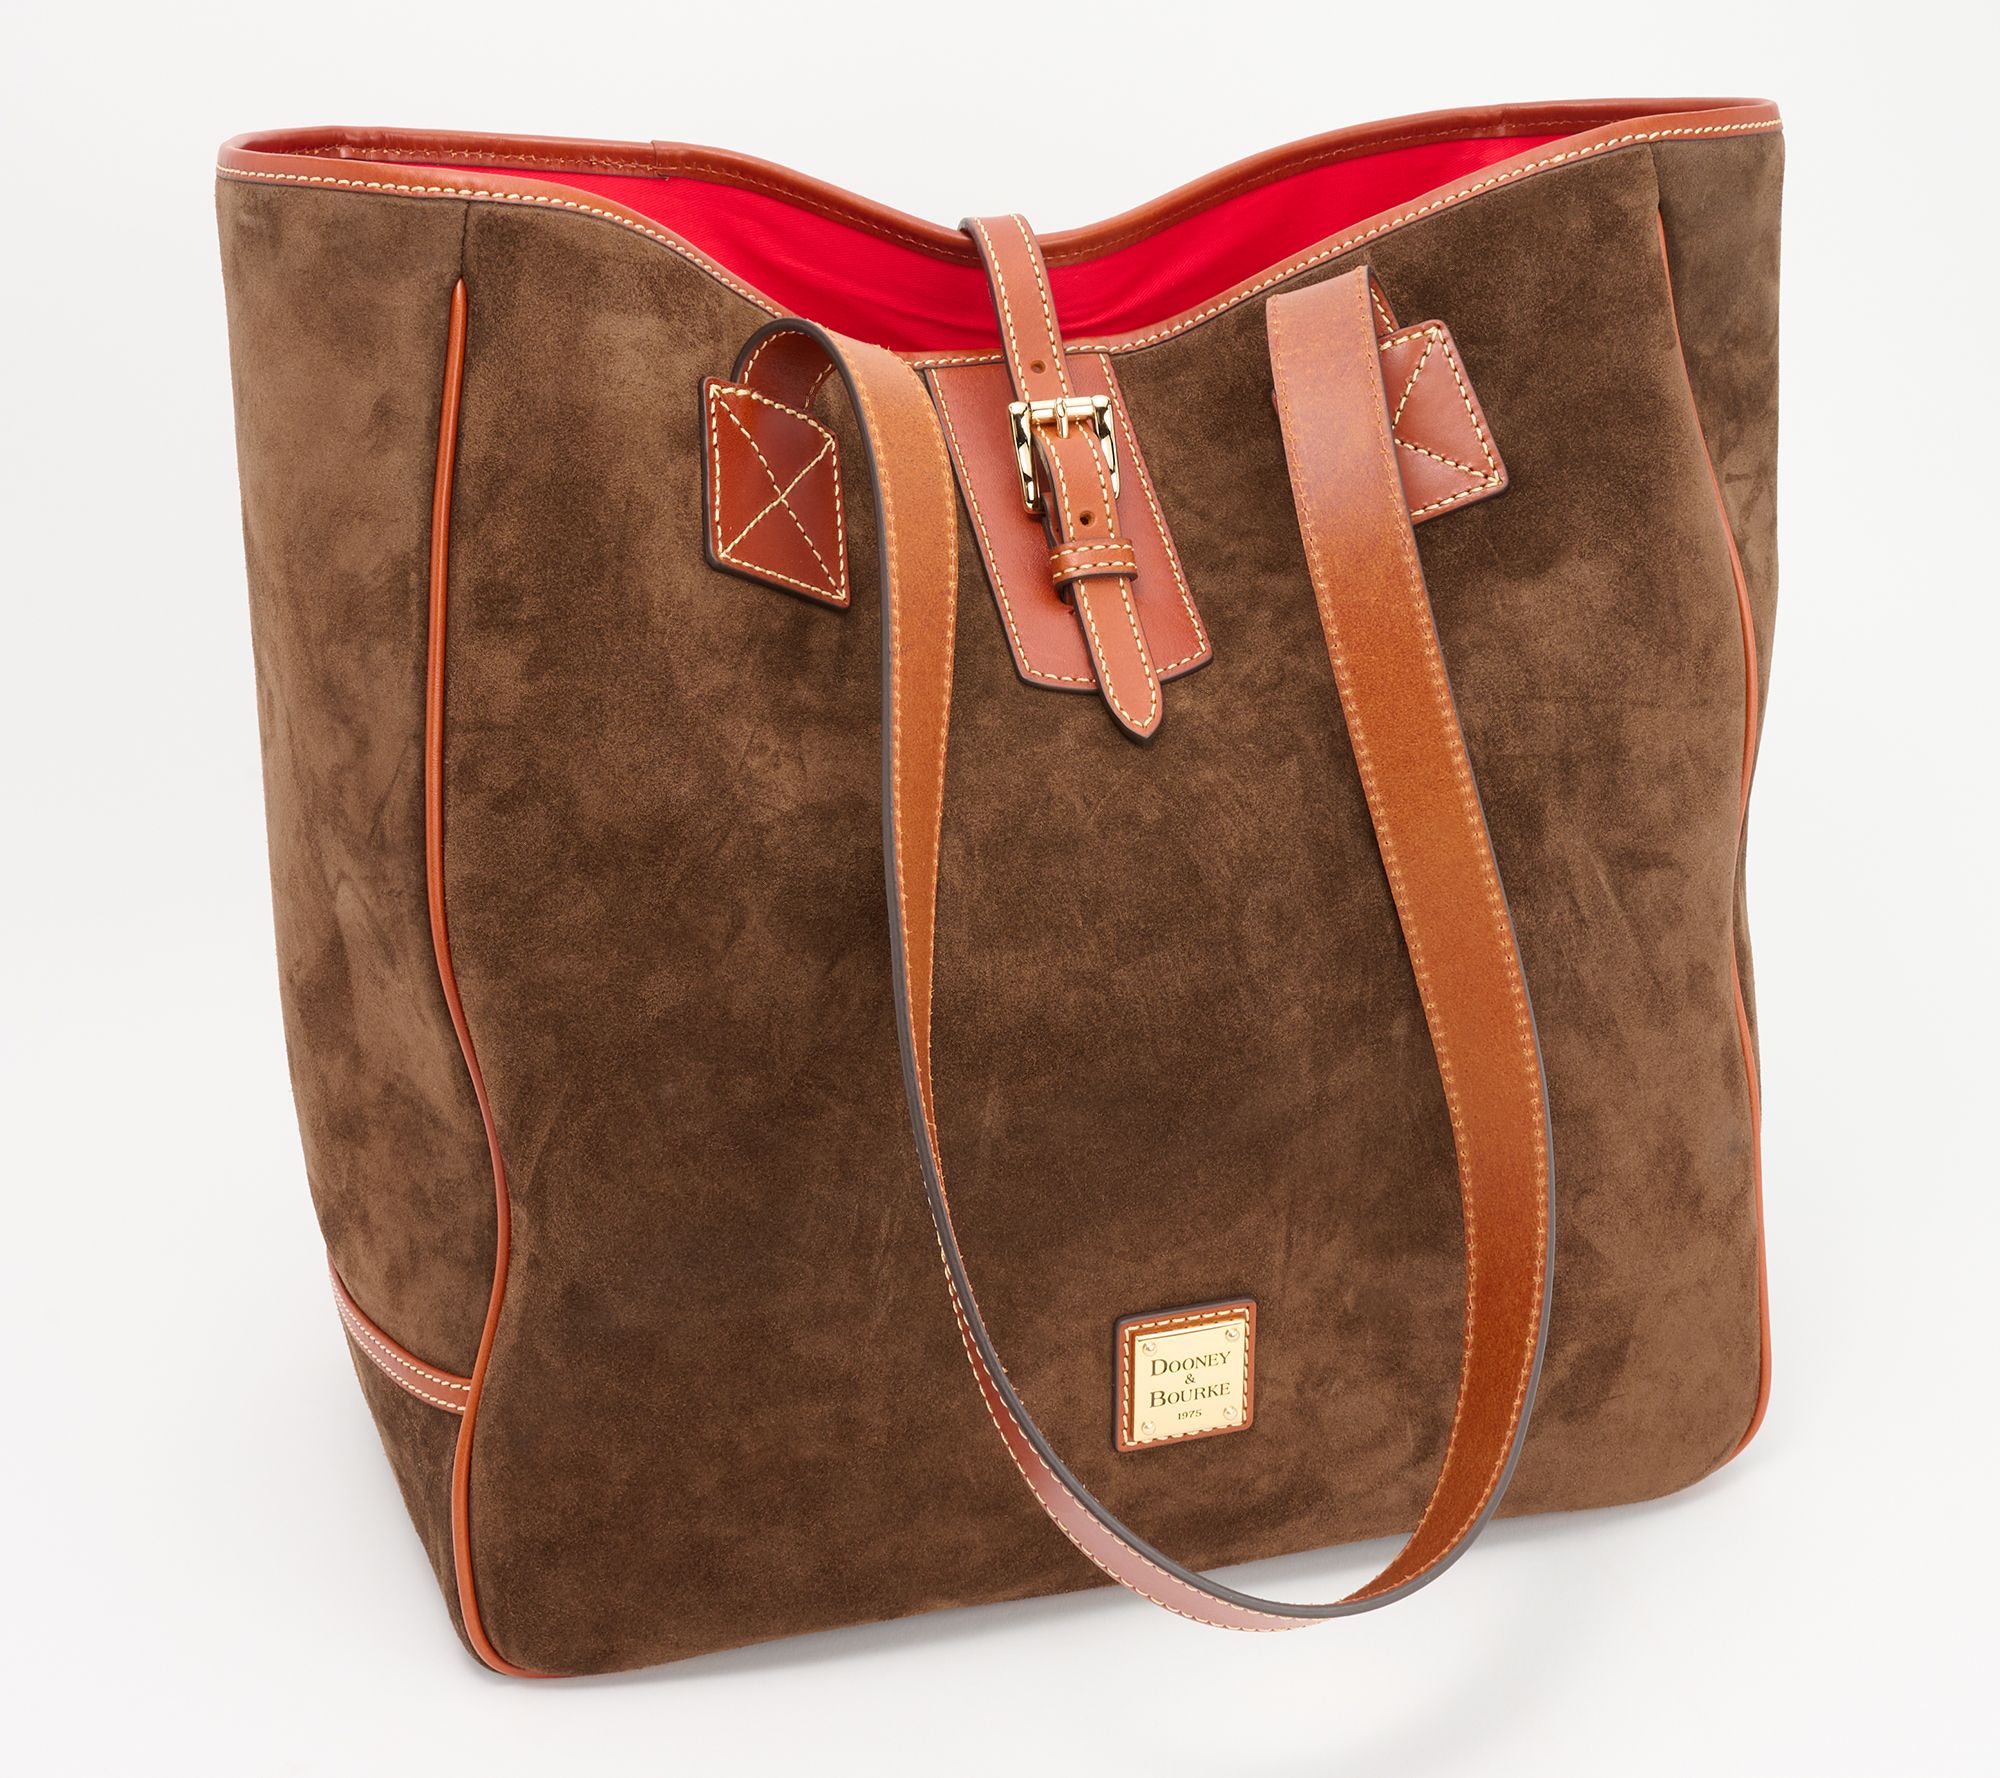 Dooney & Bourke - Brown - Handbags & Luggage - QVC.com